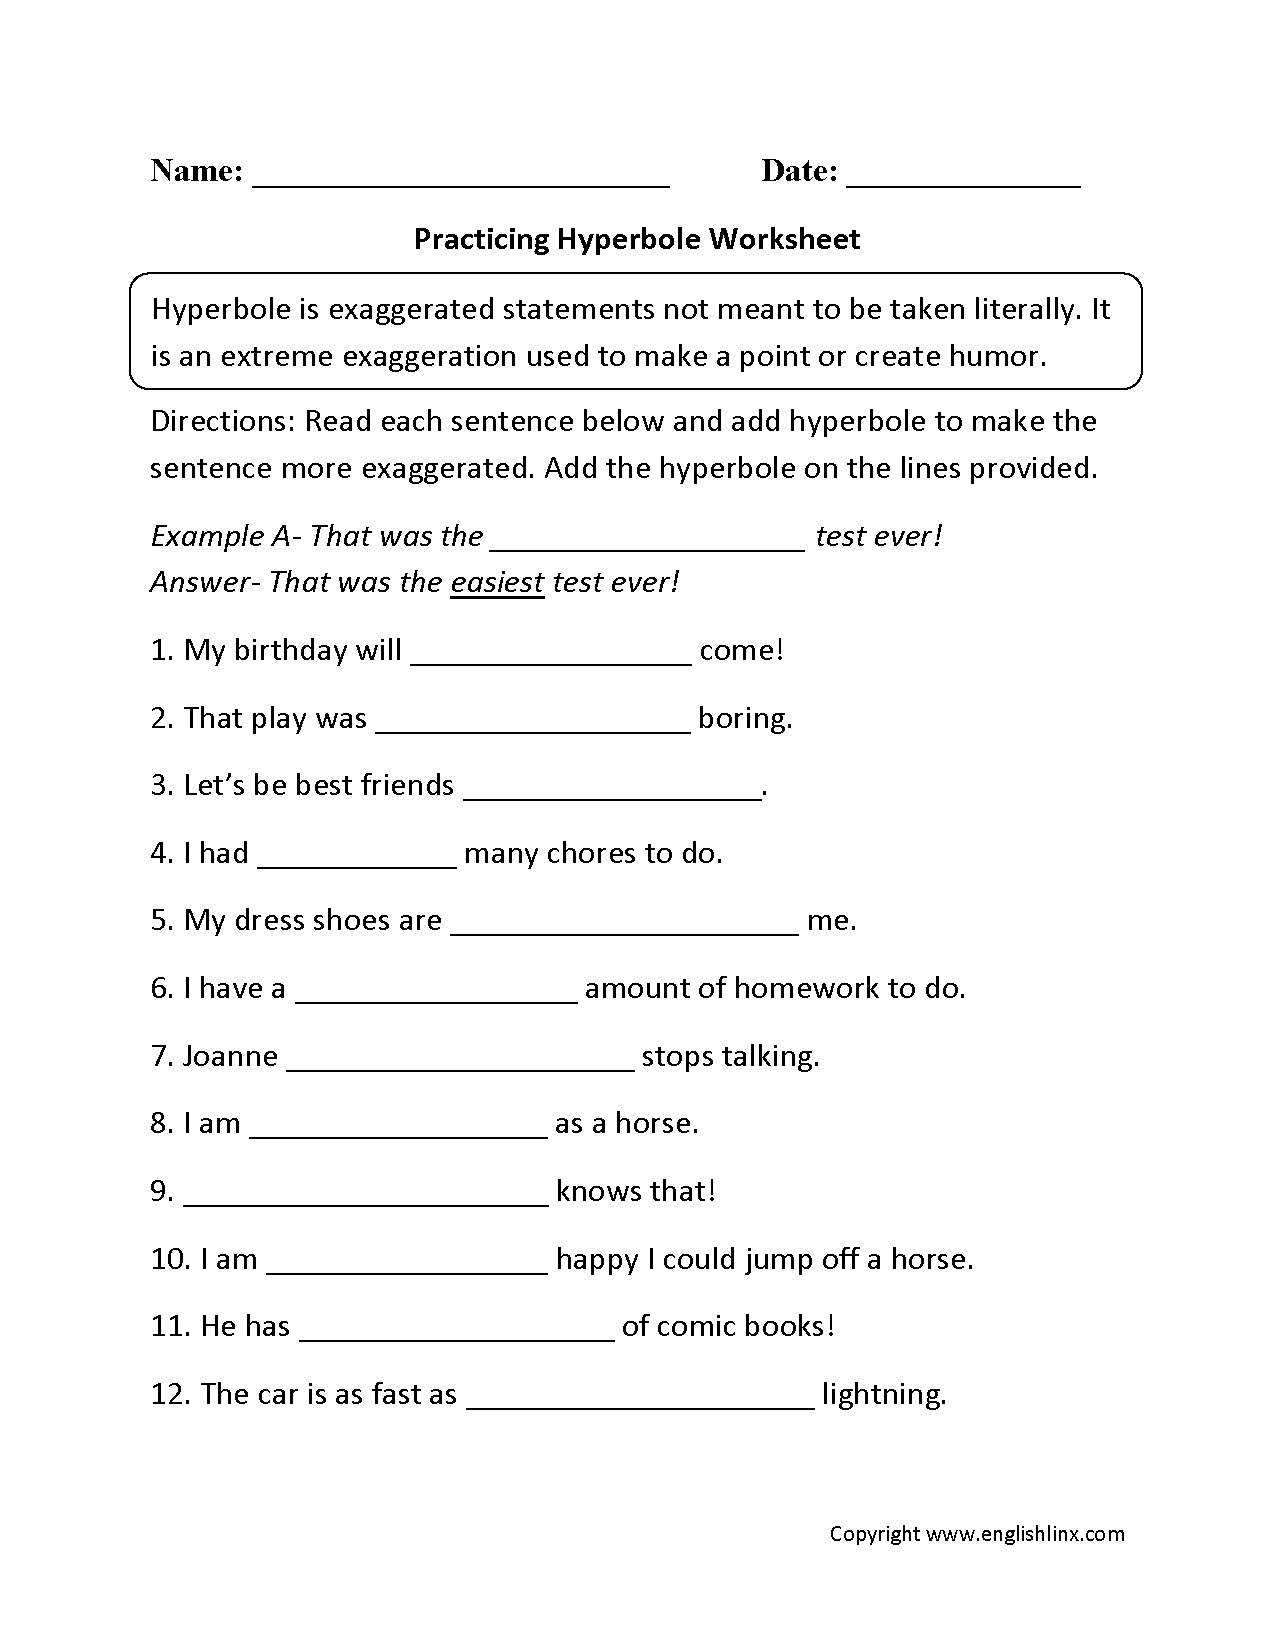 Practicing Hyperbole Worksheet